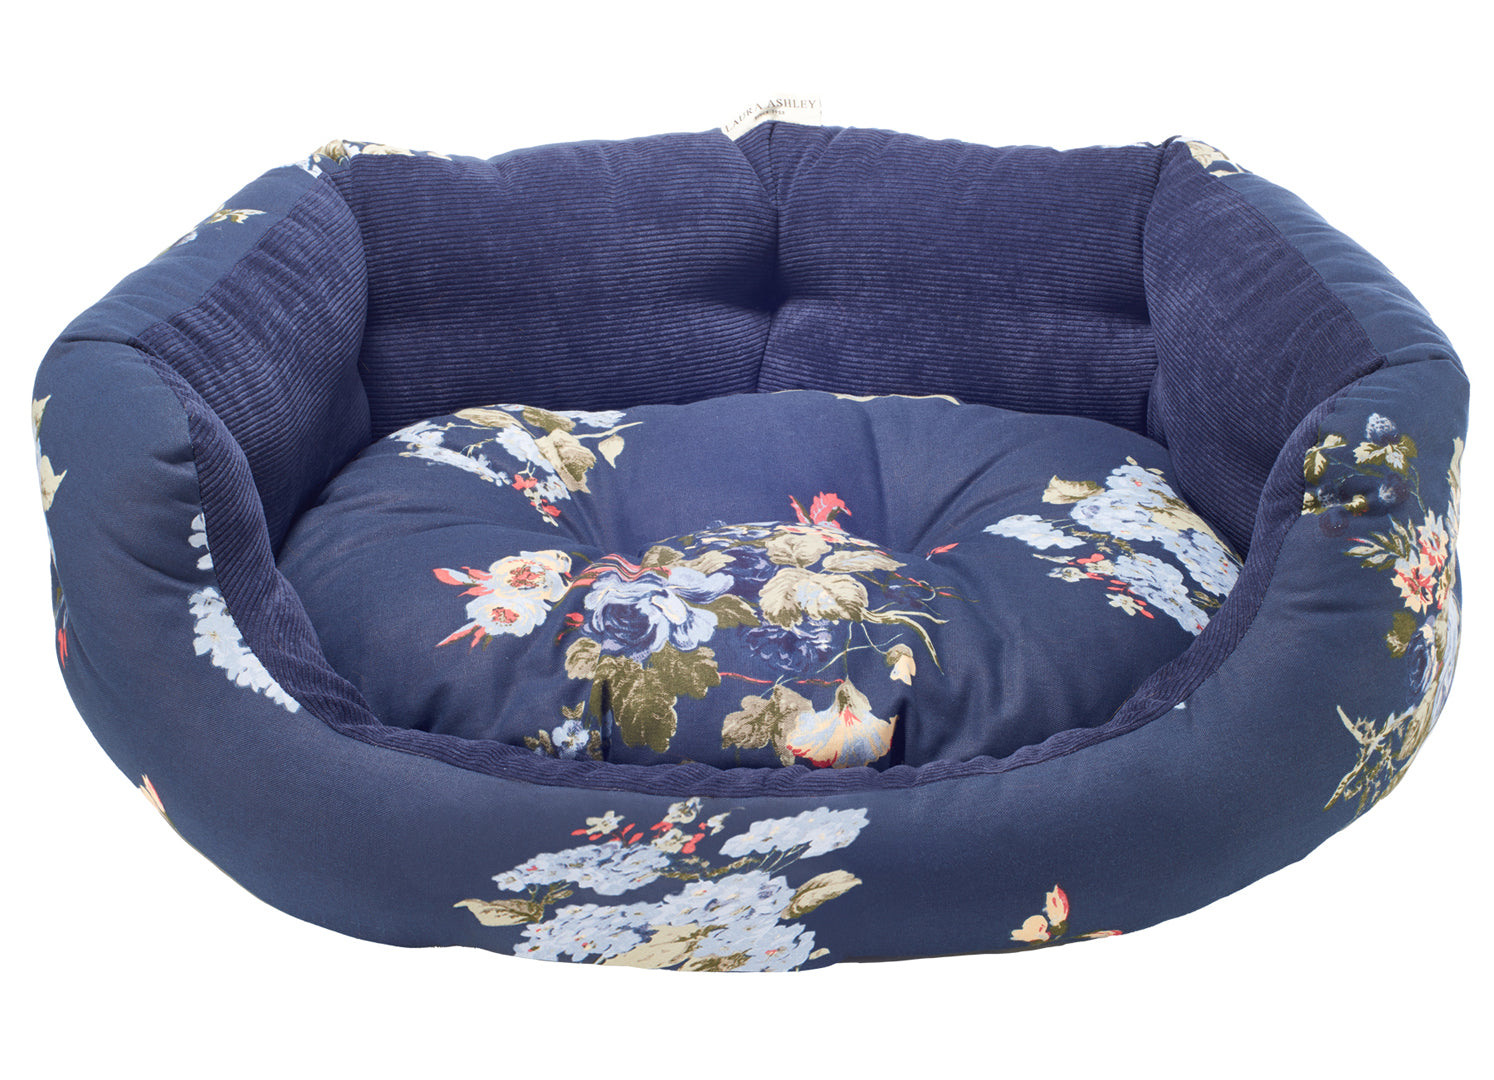 Laura Ashley Rosemore Floral Deluxe Slumber Dog Bed